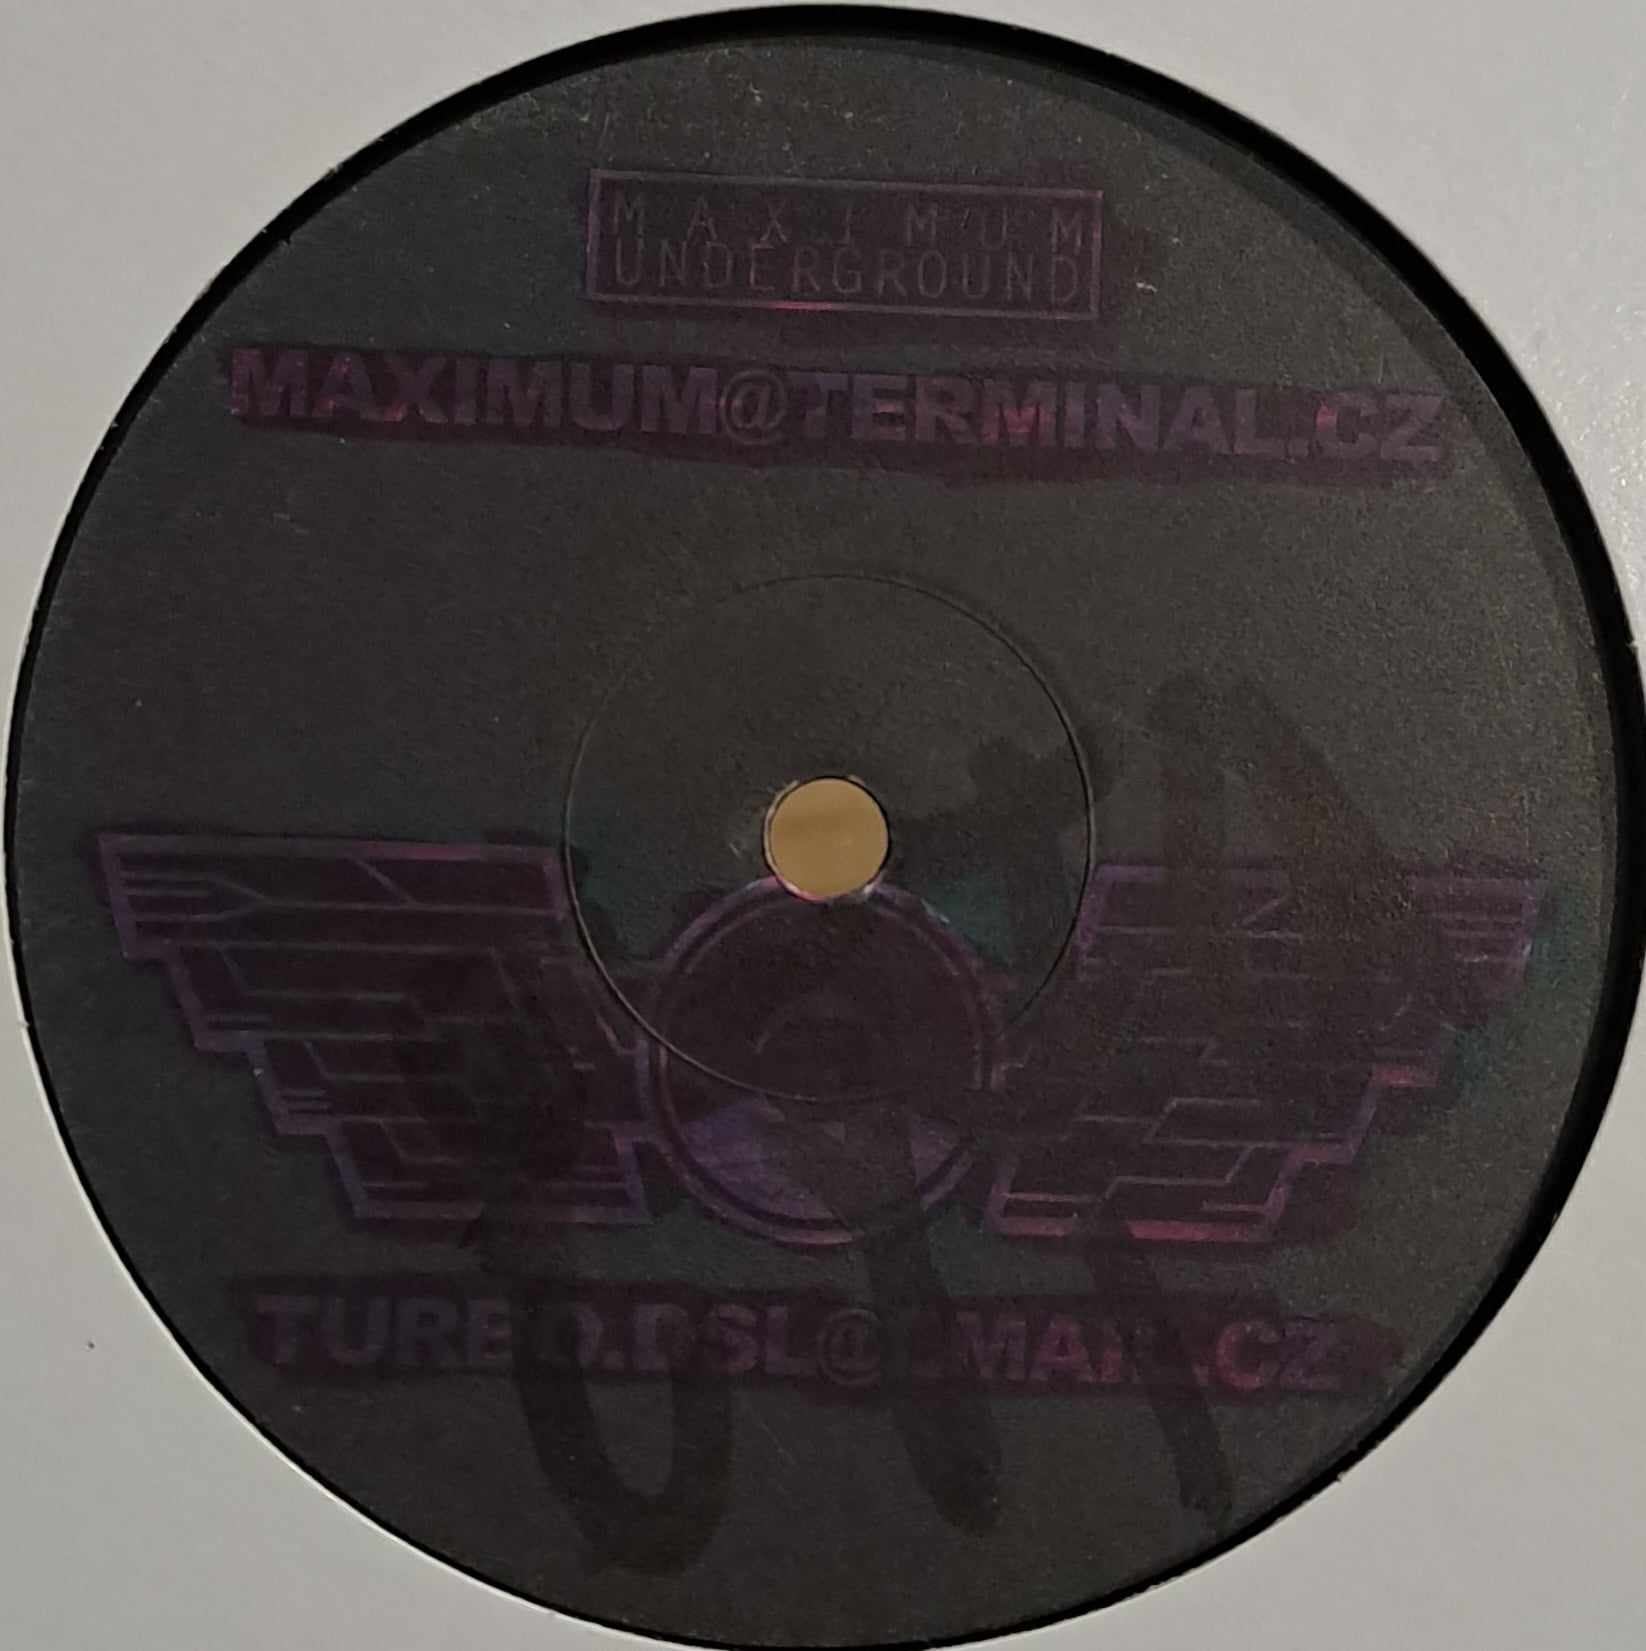 Soundbomber 01 - vinyle freetekno